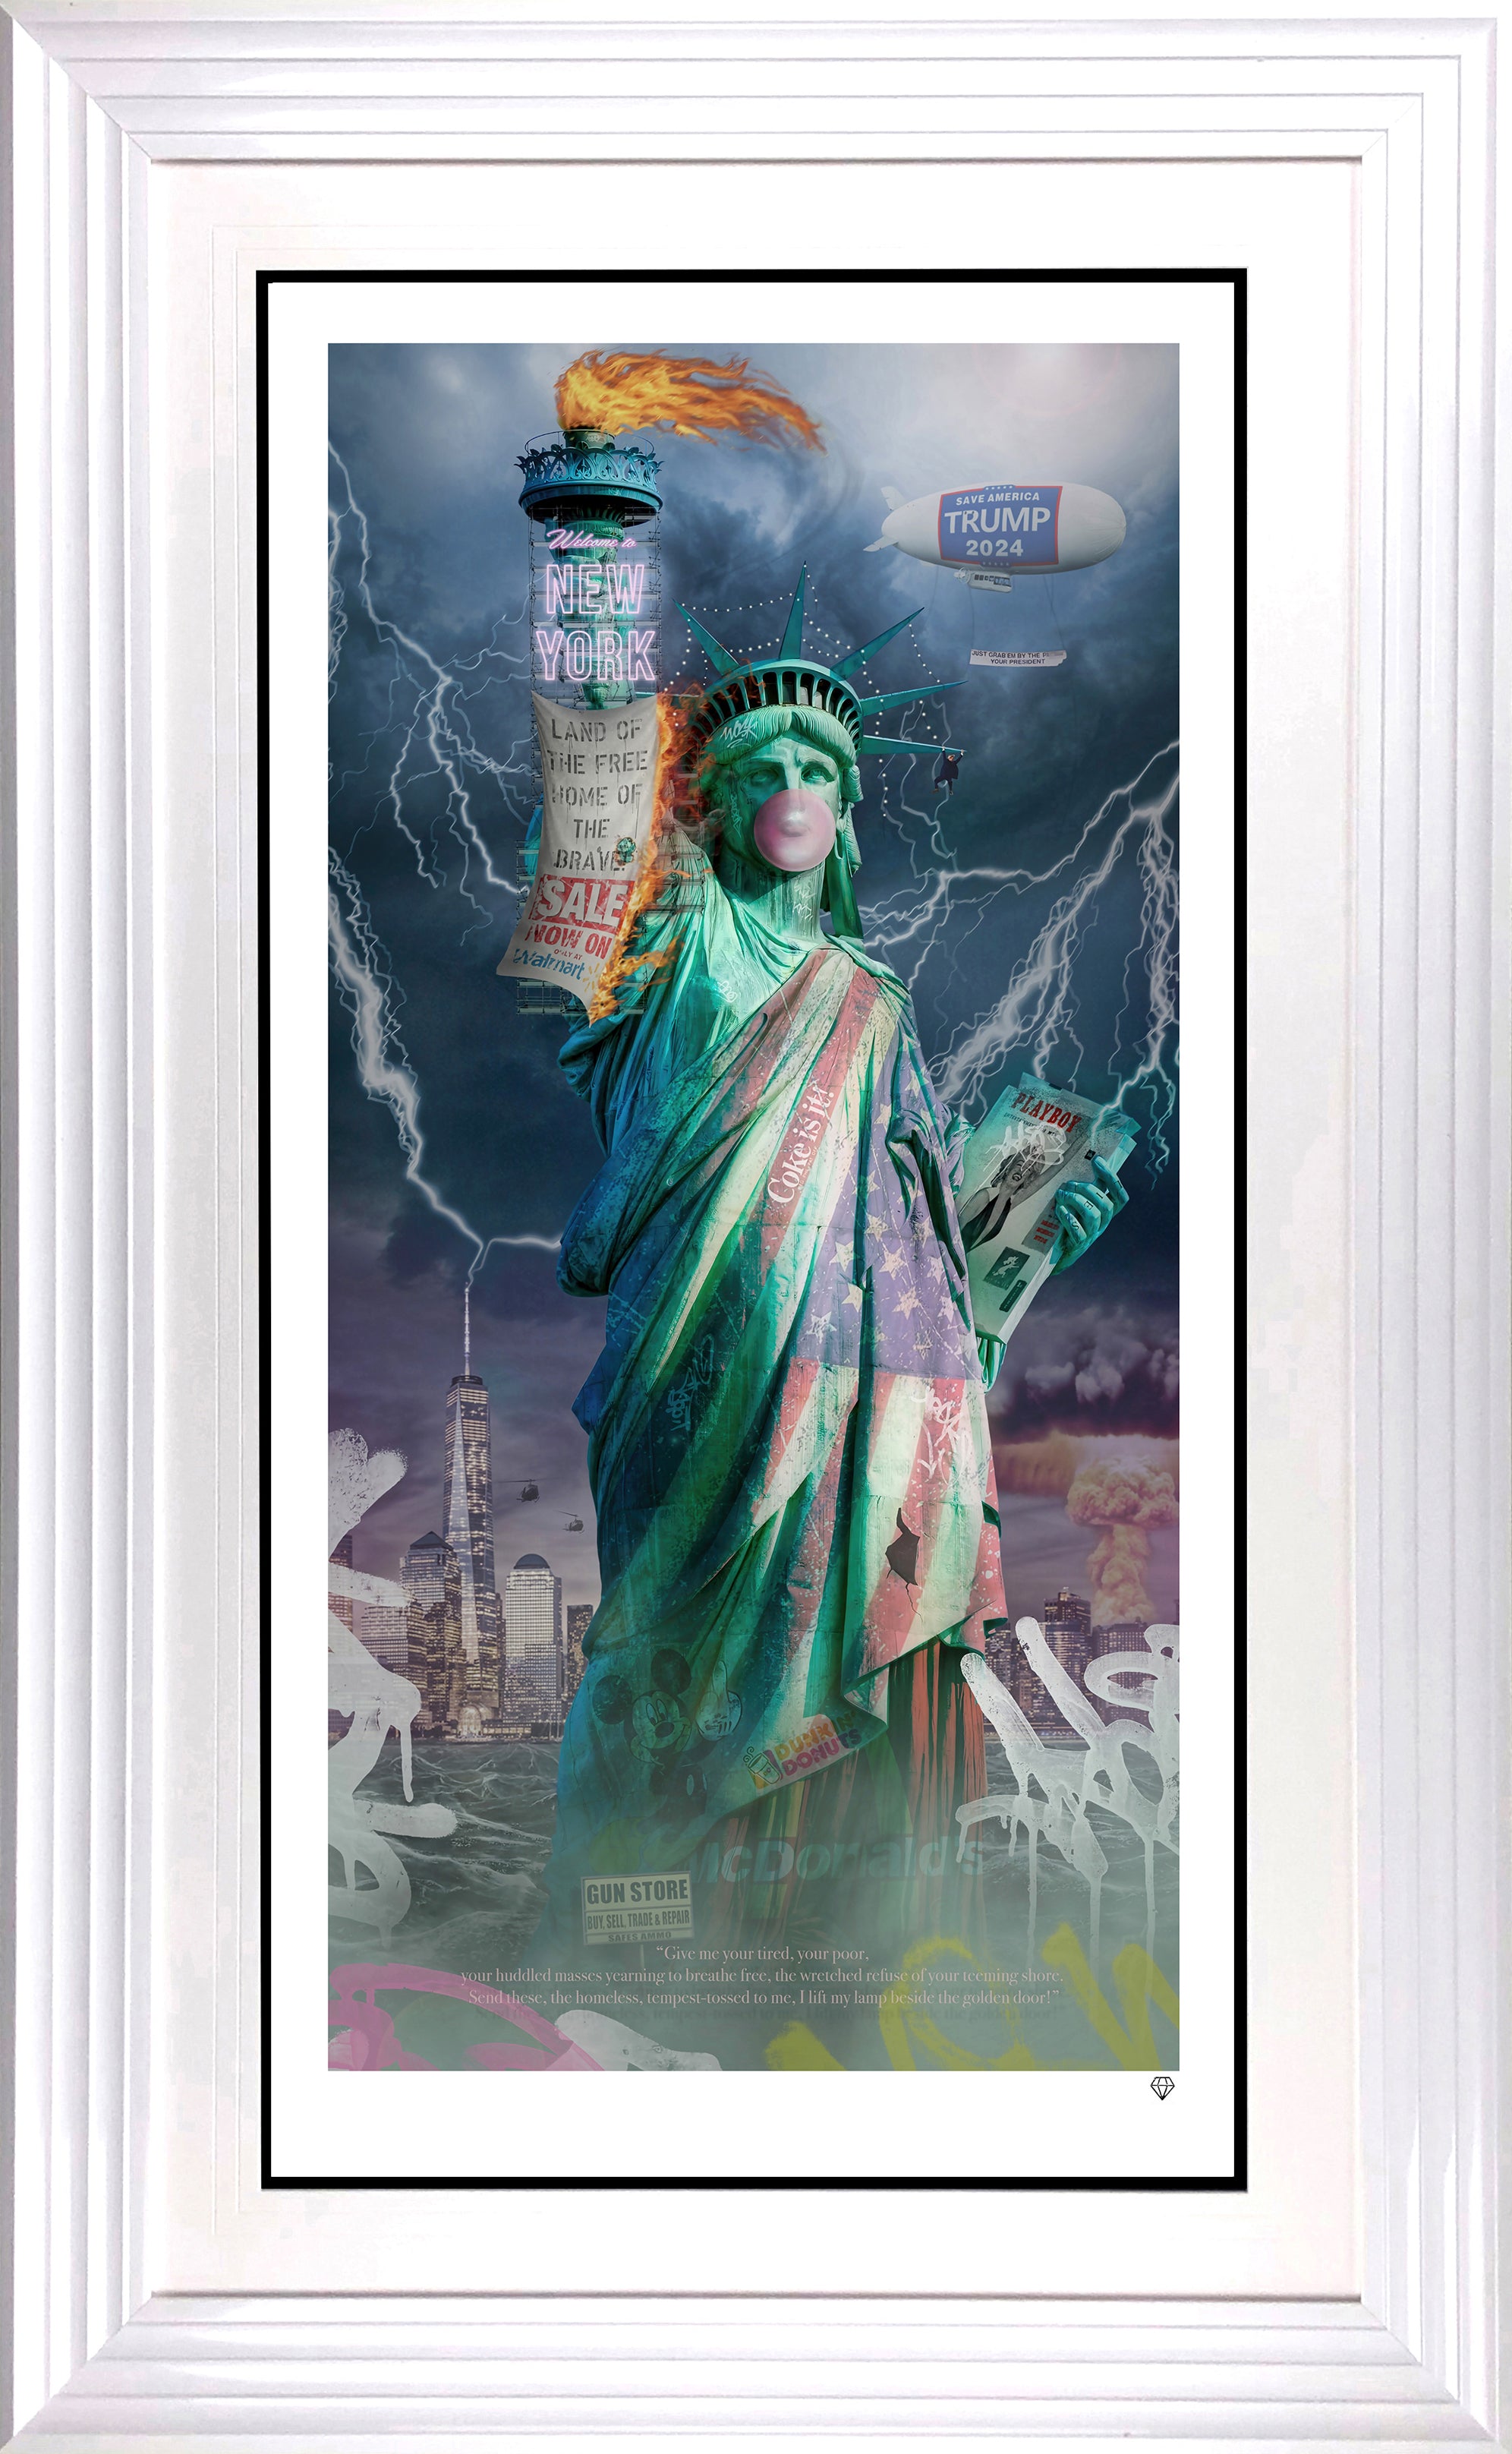 JJ Adams - 'Trump's Liberty' - Framed Limited Edition